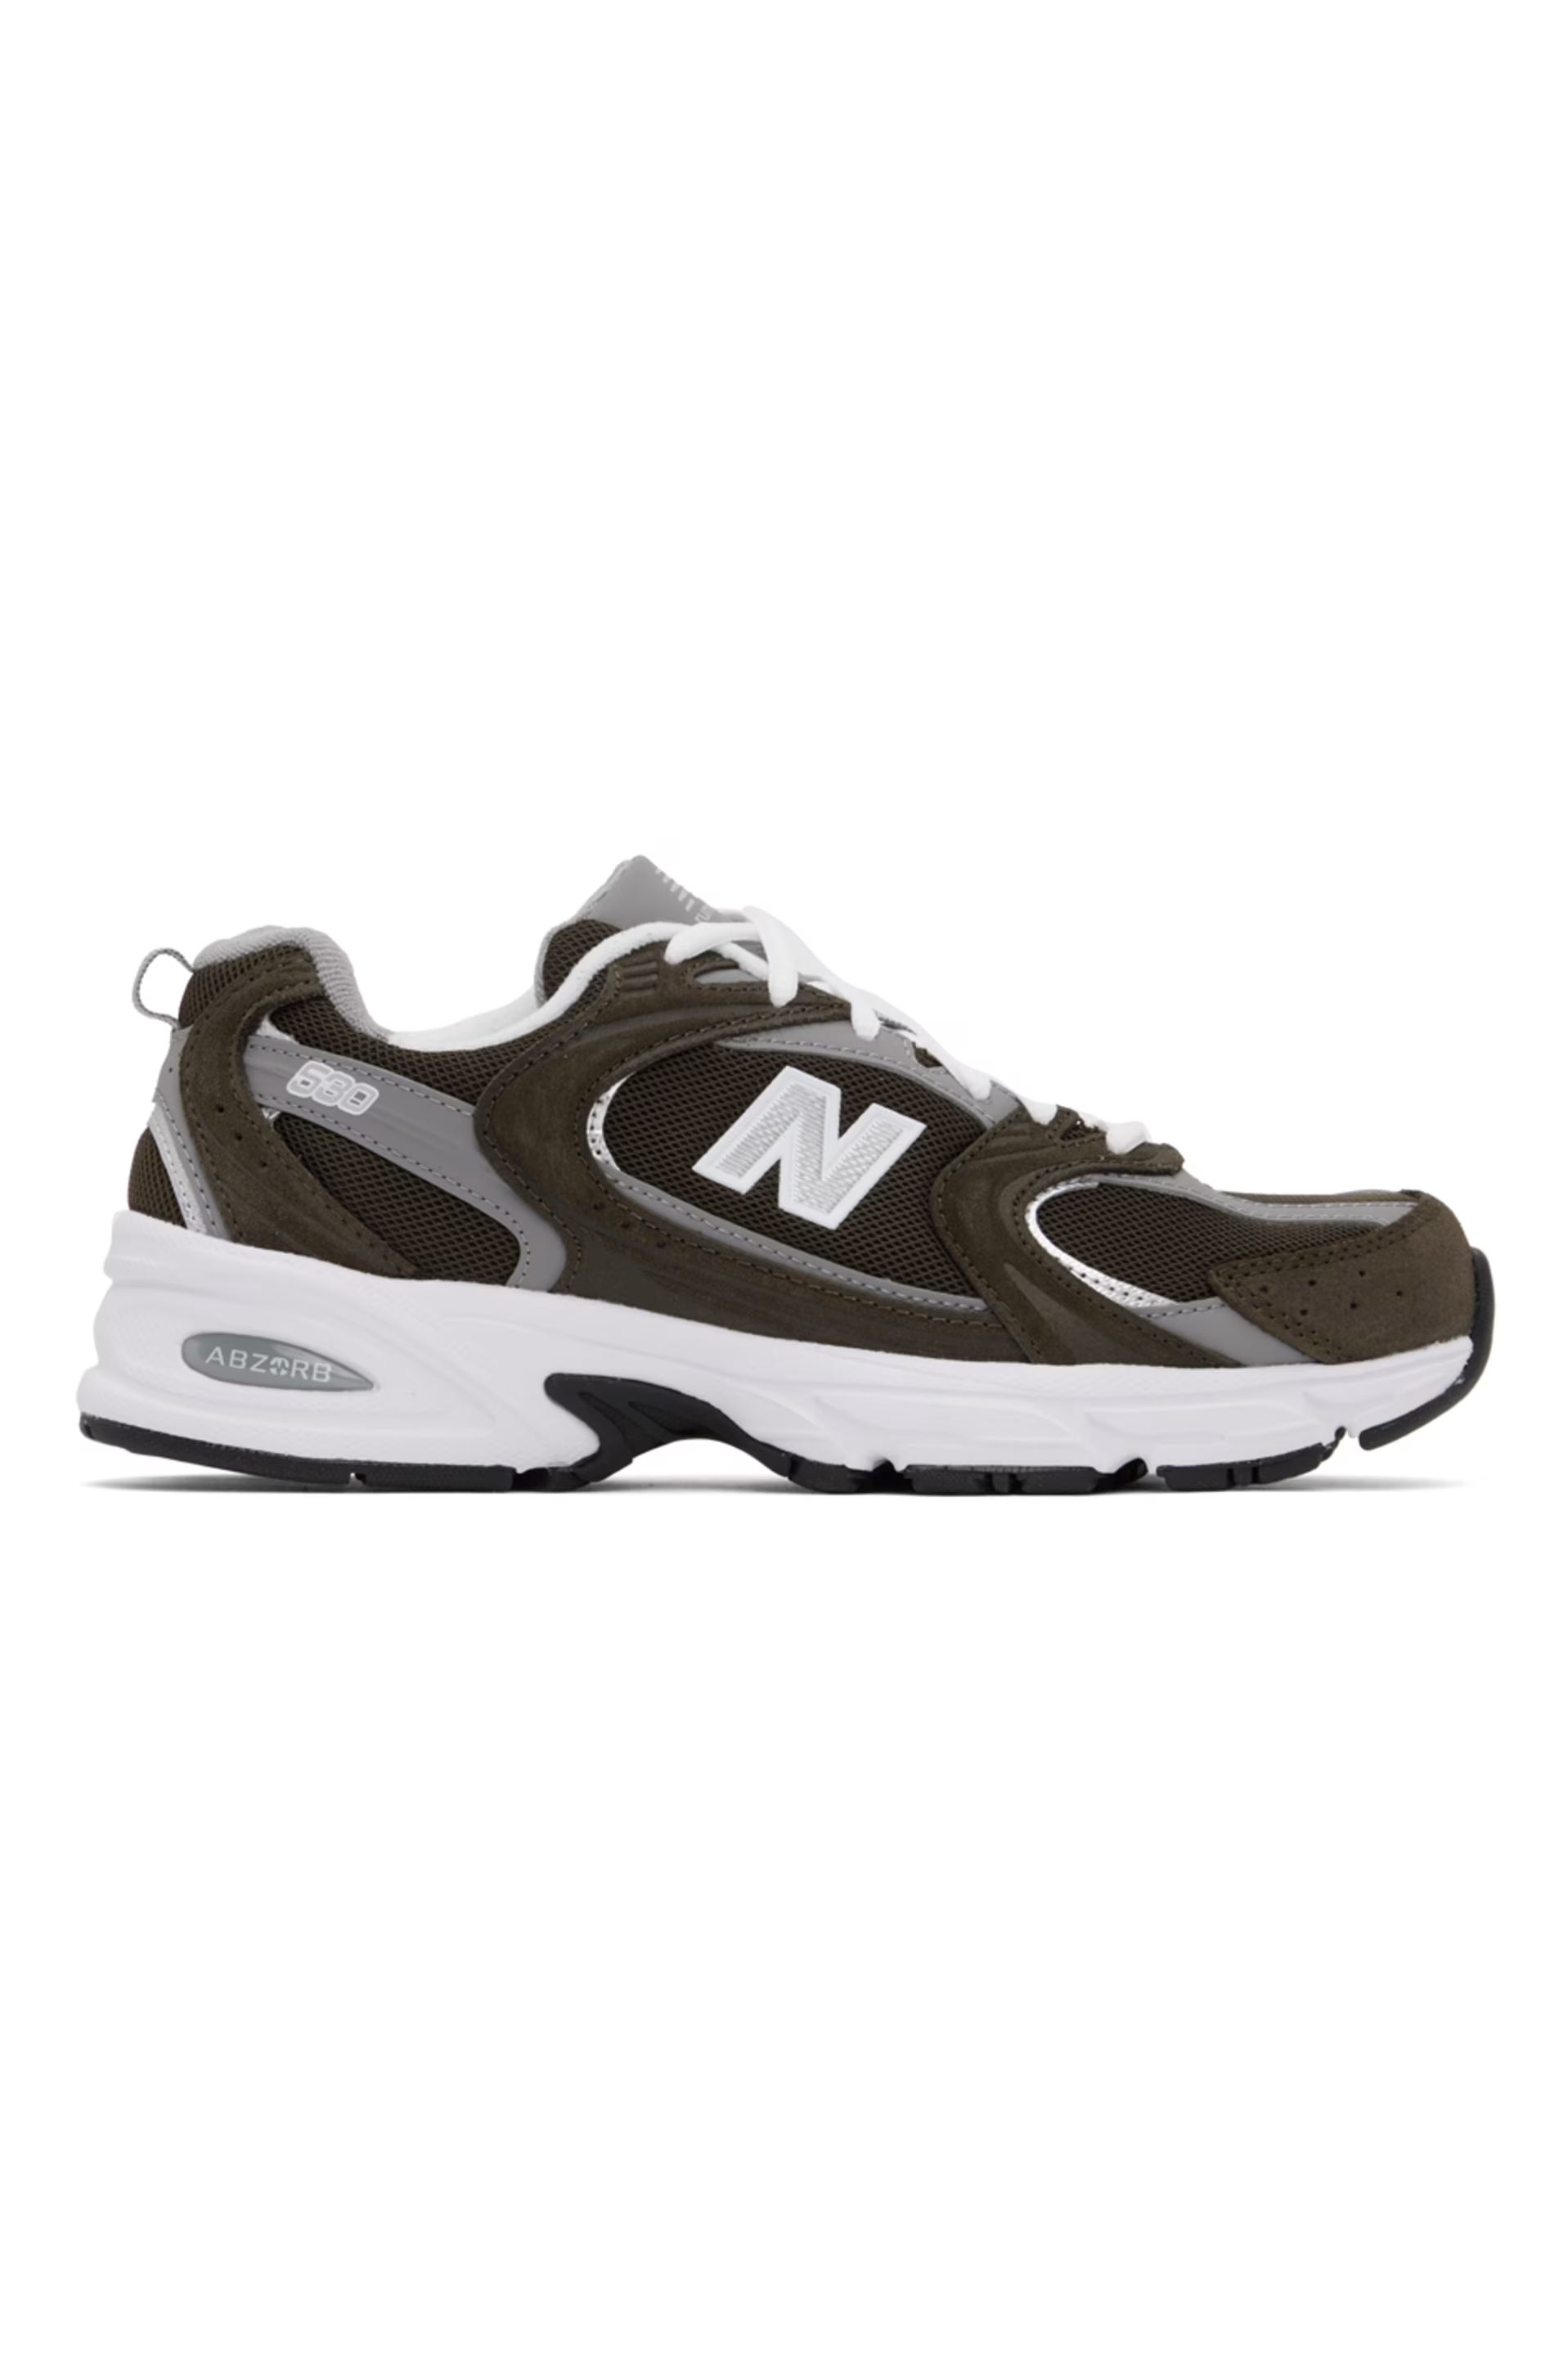 New Balance - Brown 530 Sneakers | SSENSE